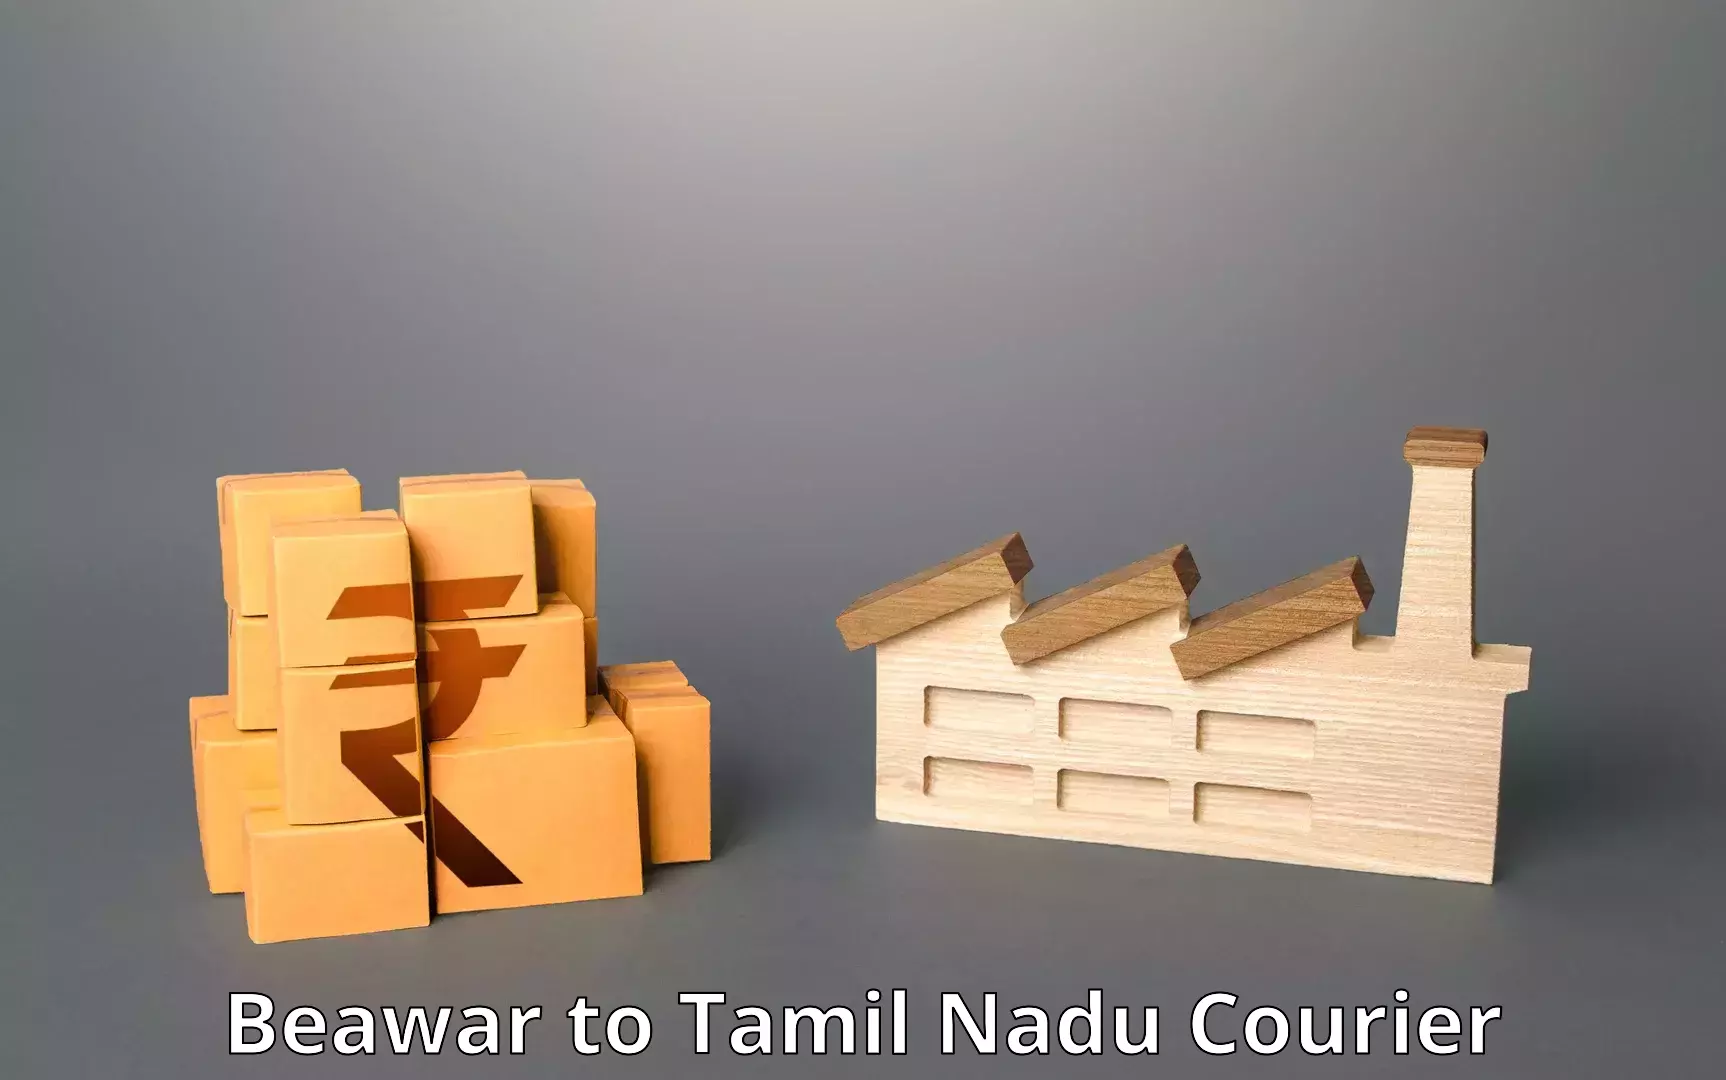 End-to-end delivery Beawar to Villupuram